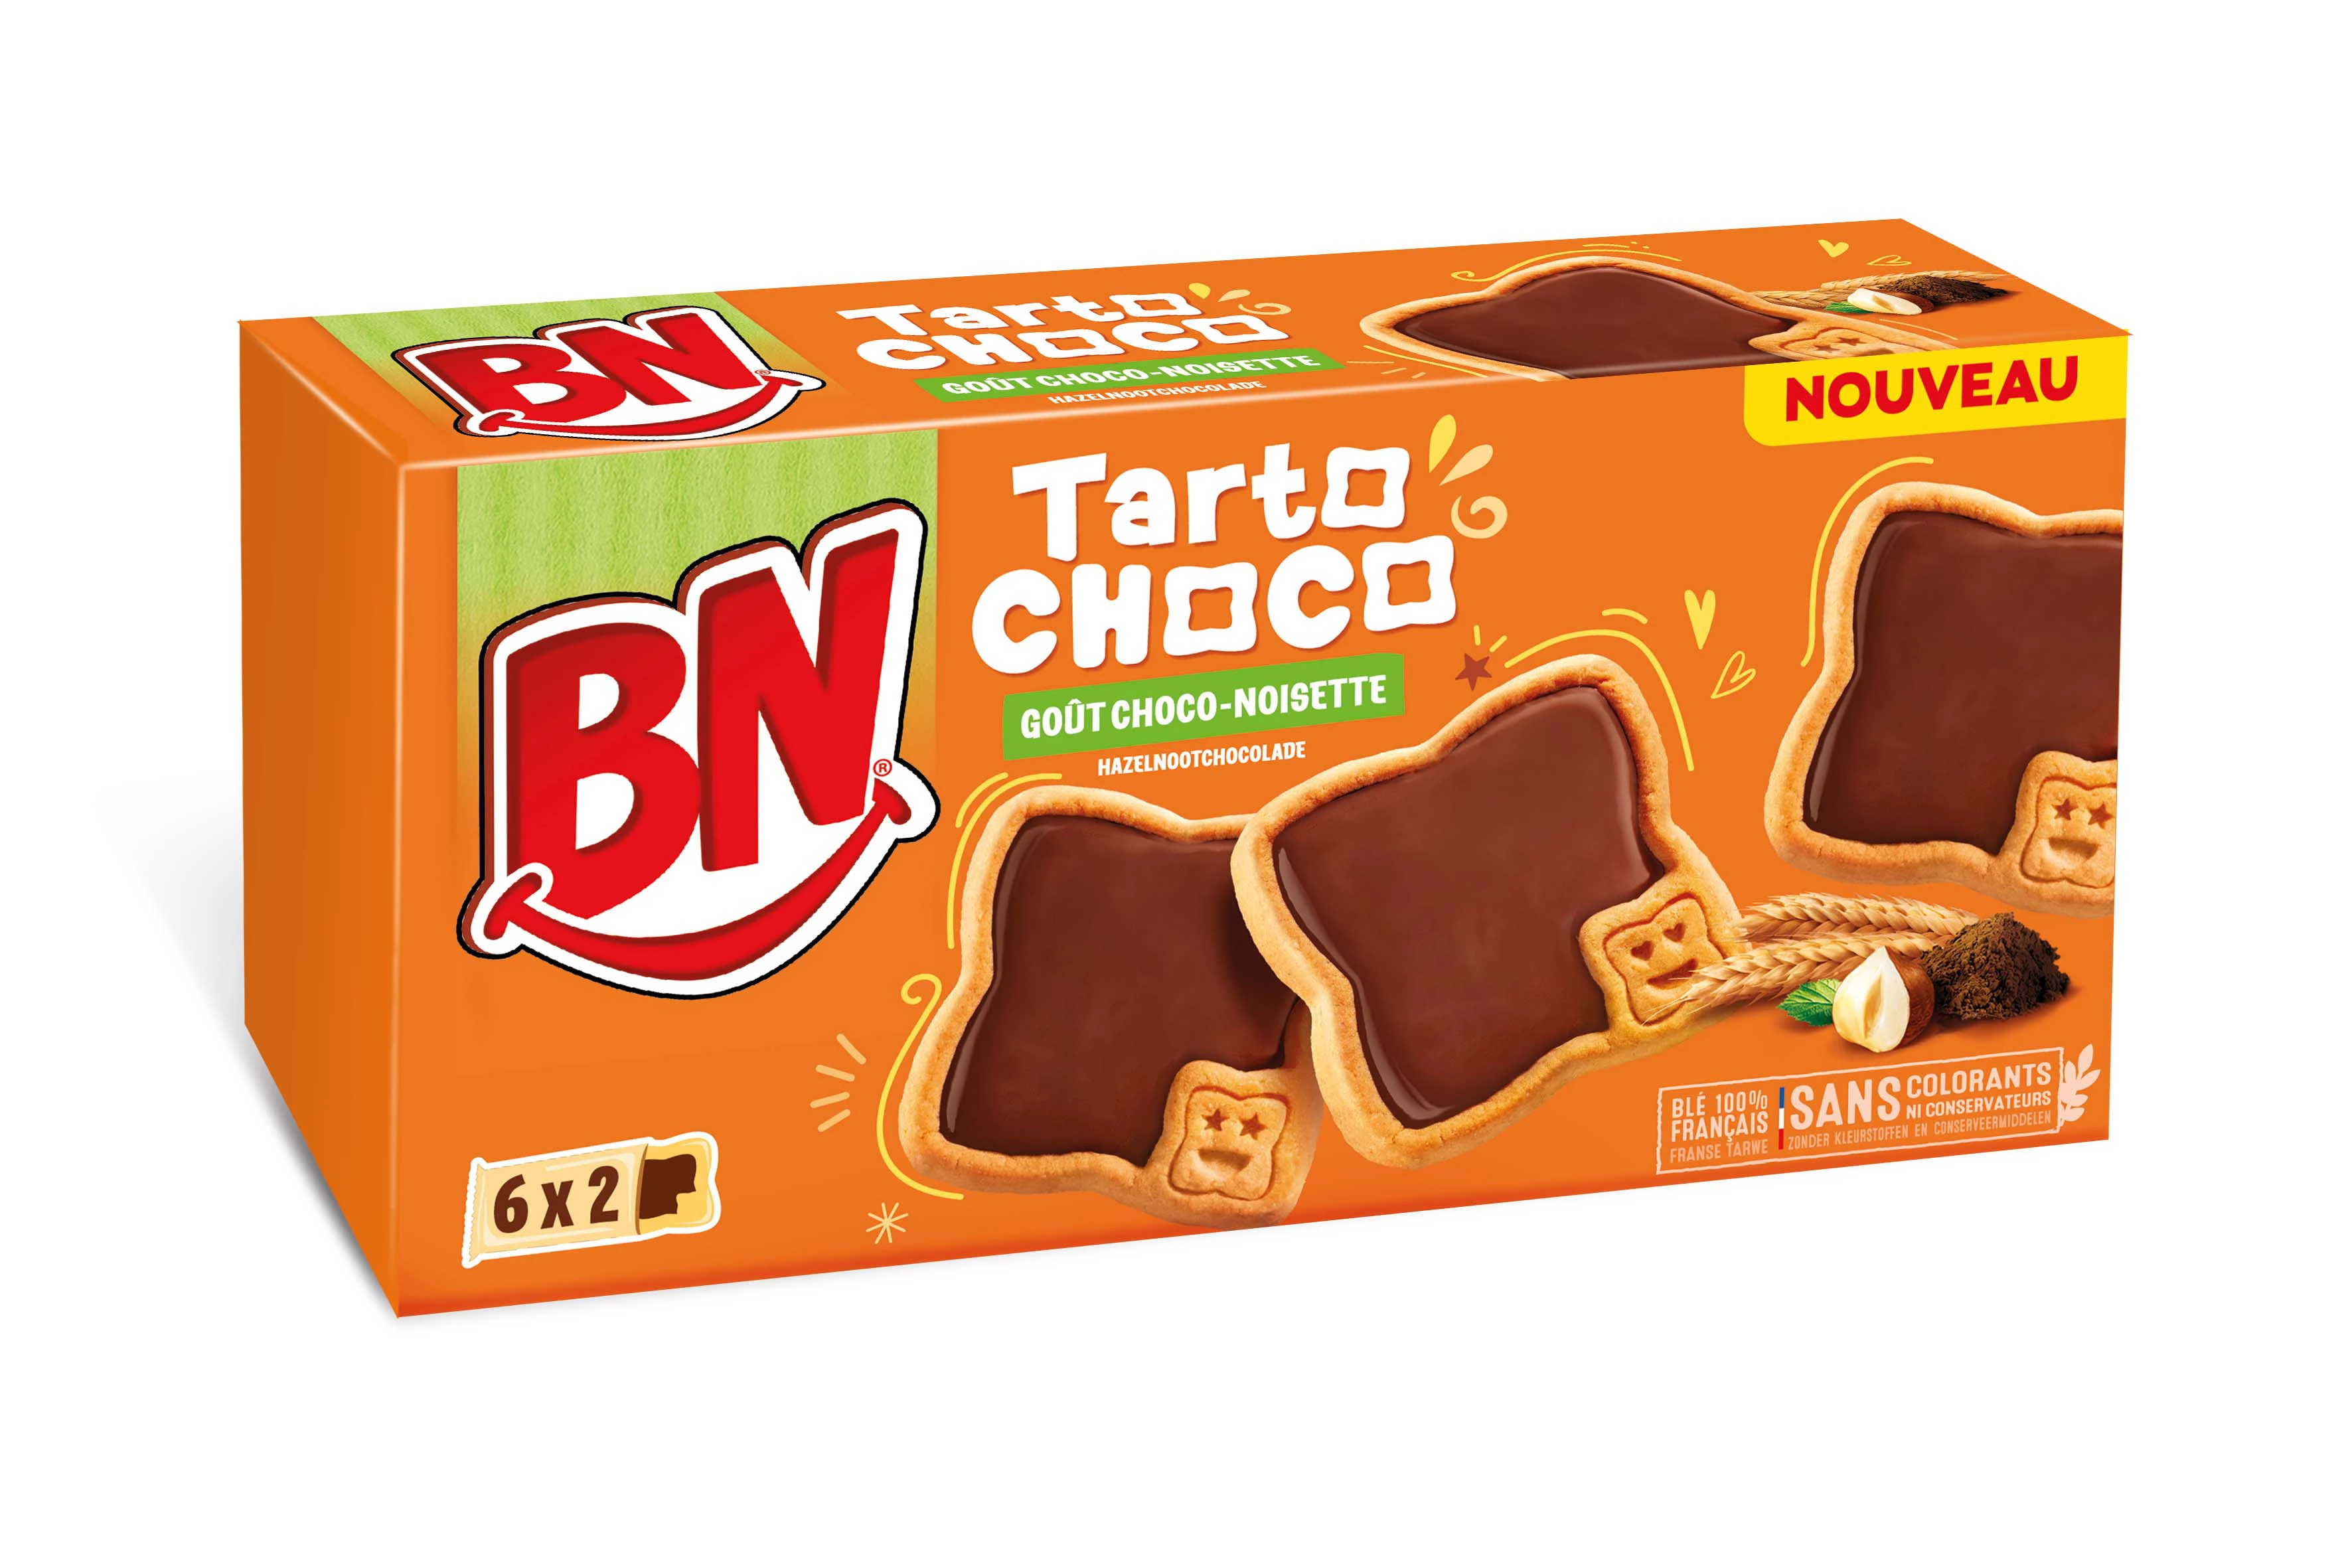 Tarto Choco Chocolate Coated Biscuits, 200g - BN